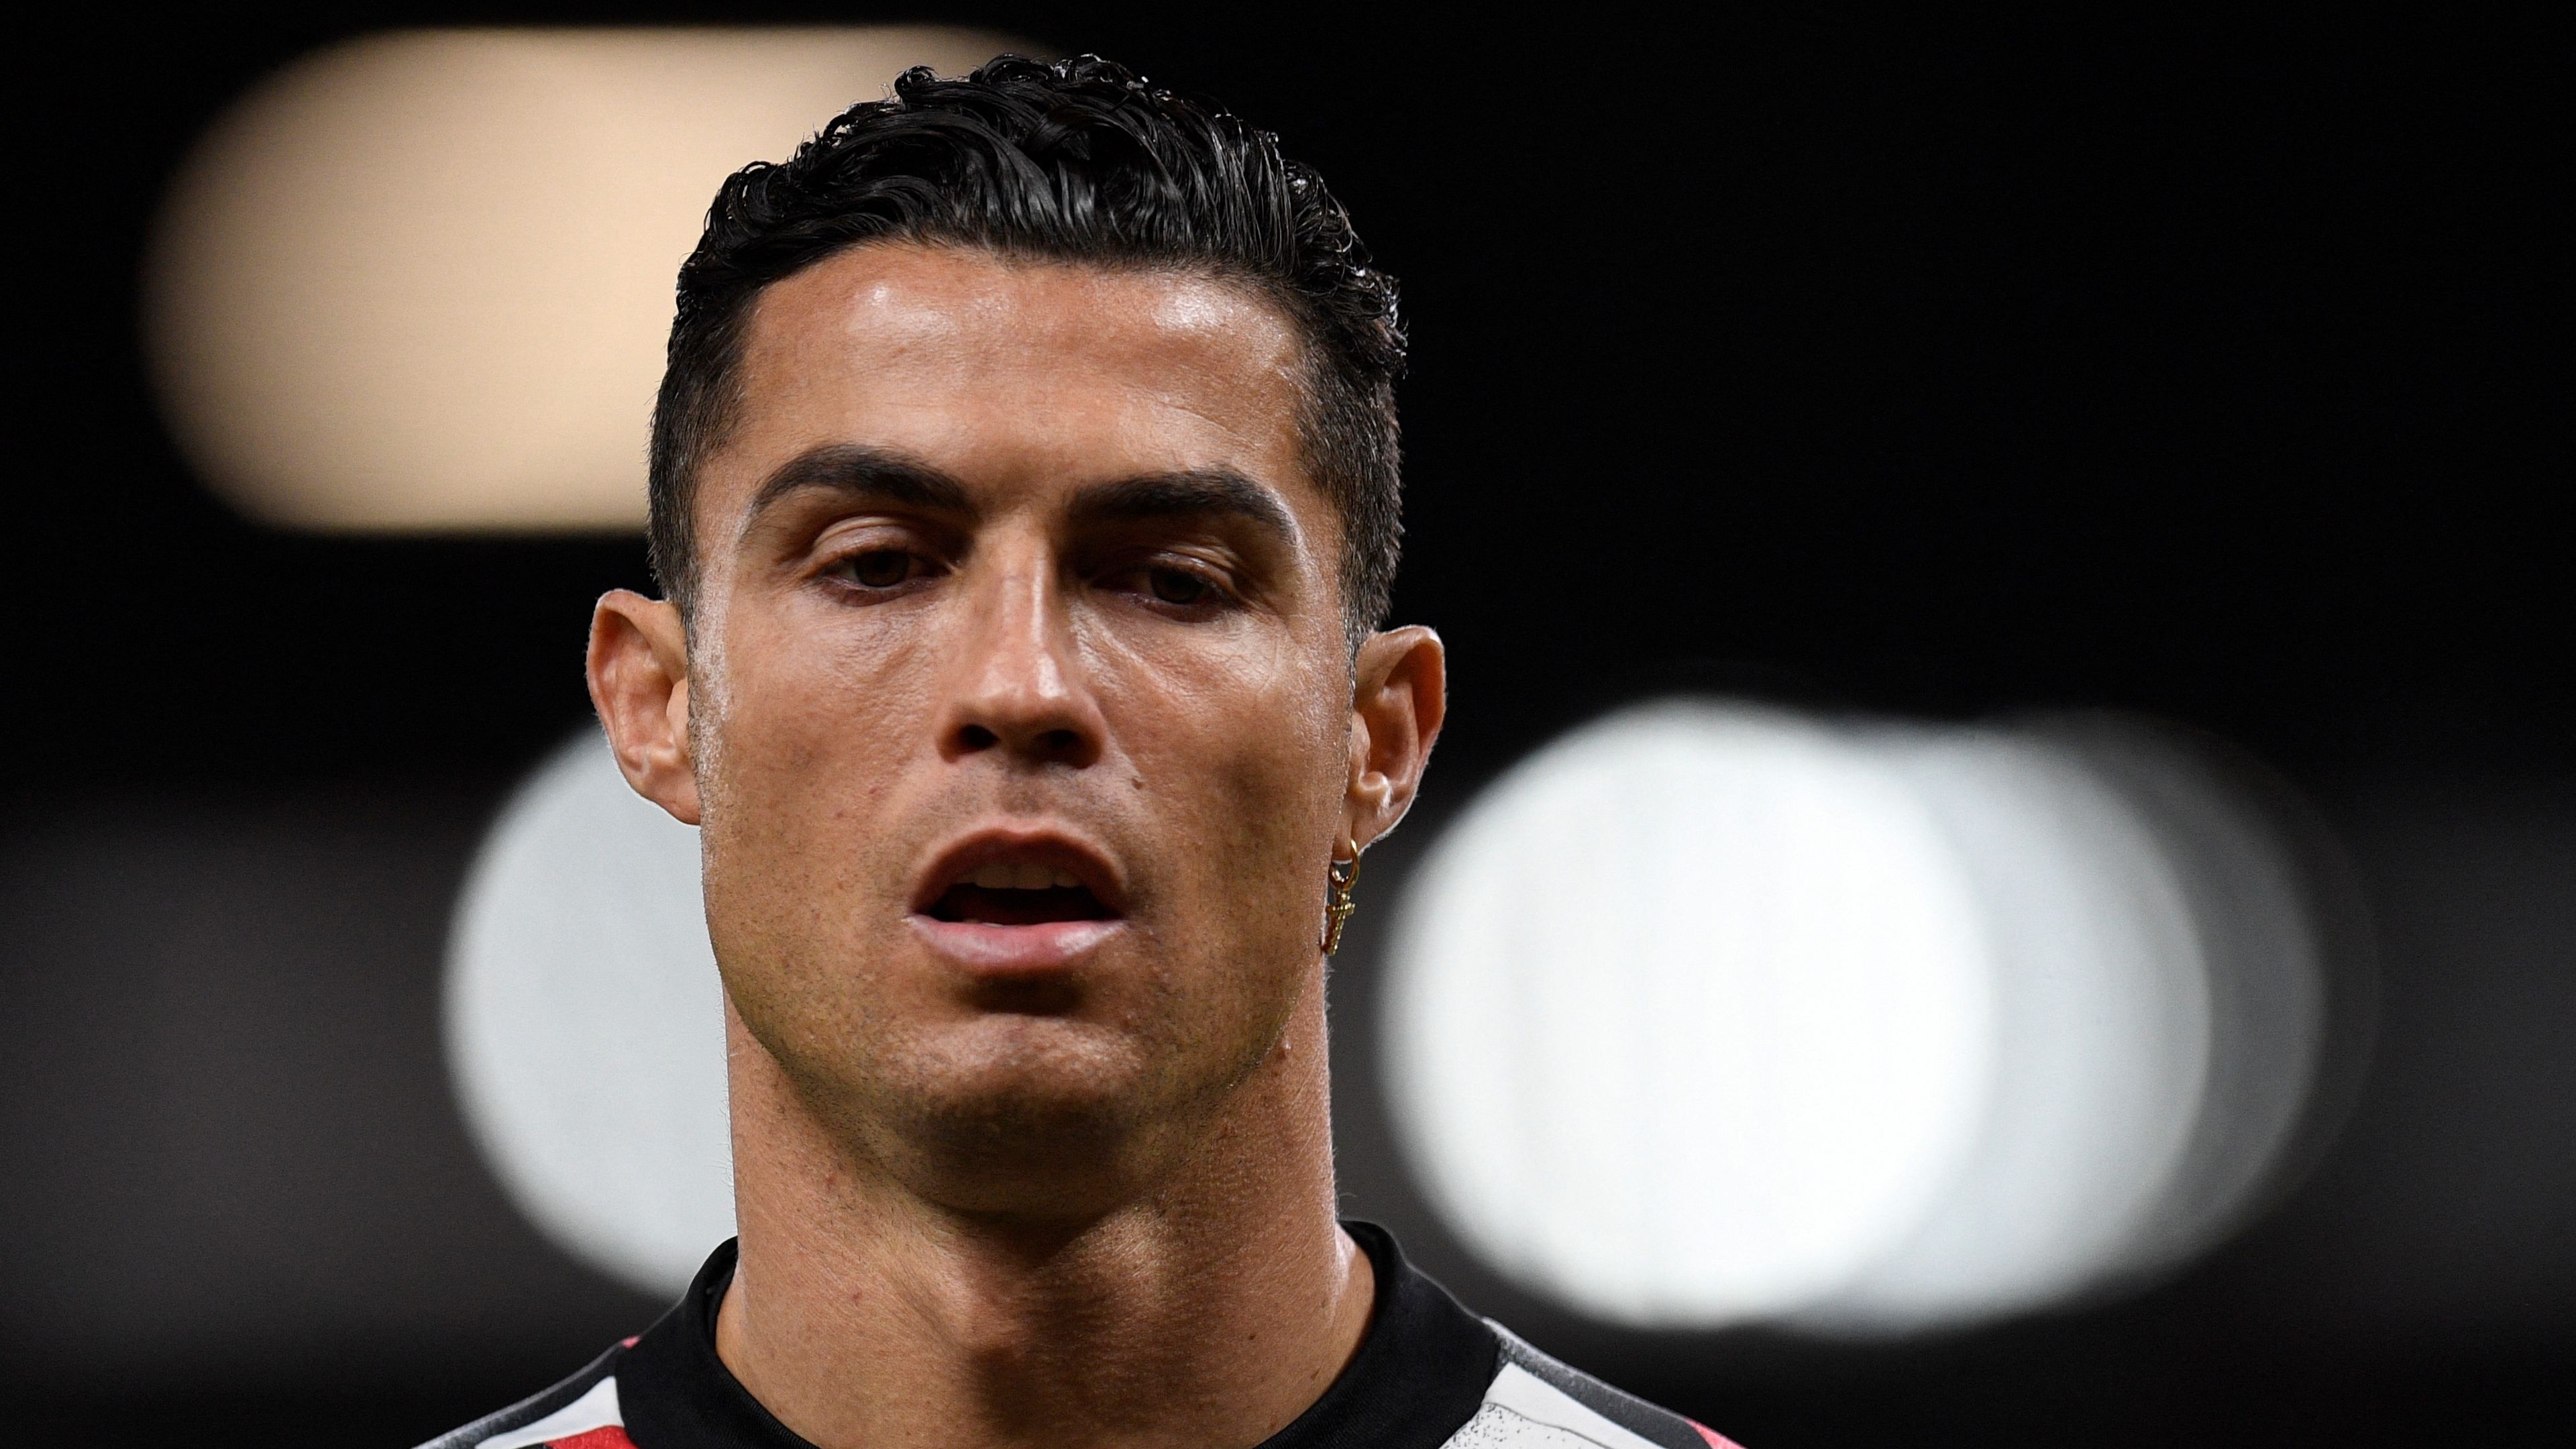 Cristiano Ronaldo may move to the Australian championship